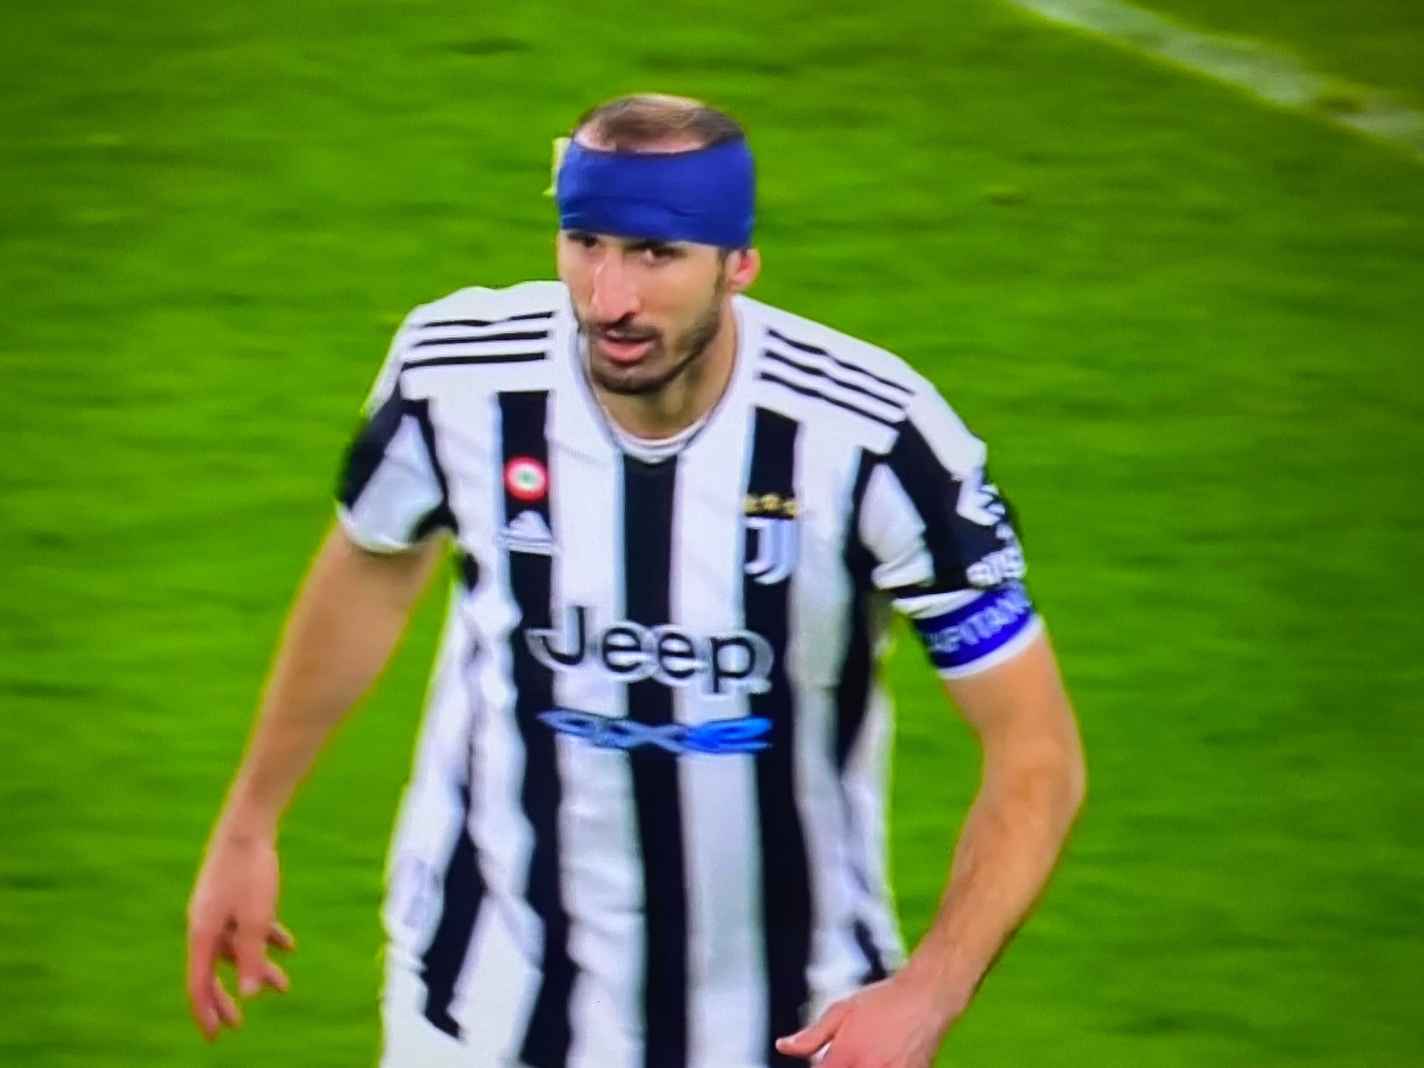 Giorgio Chiellini with a head bandage is football heritage